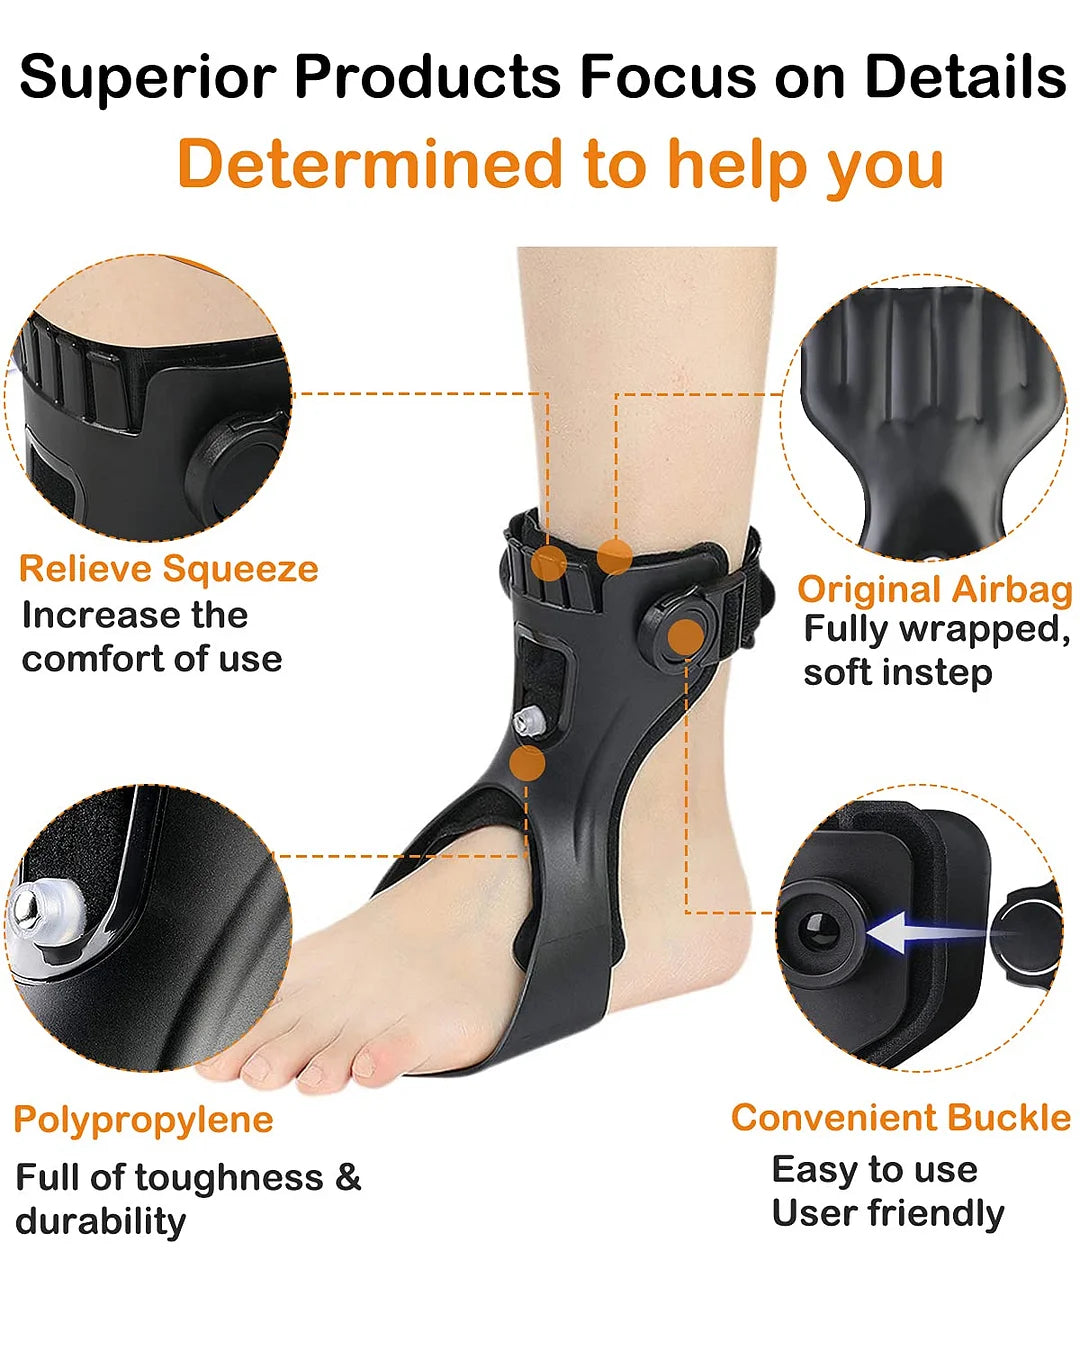 Drop Foot Brace Afo Splint | Ankle Foot Orthosis Support